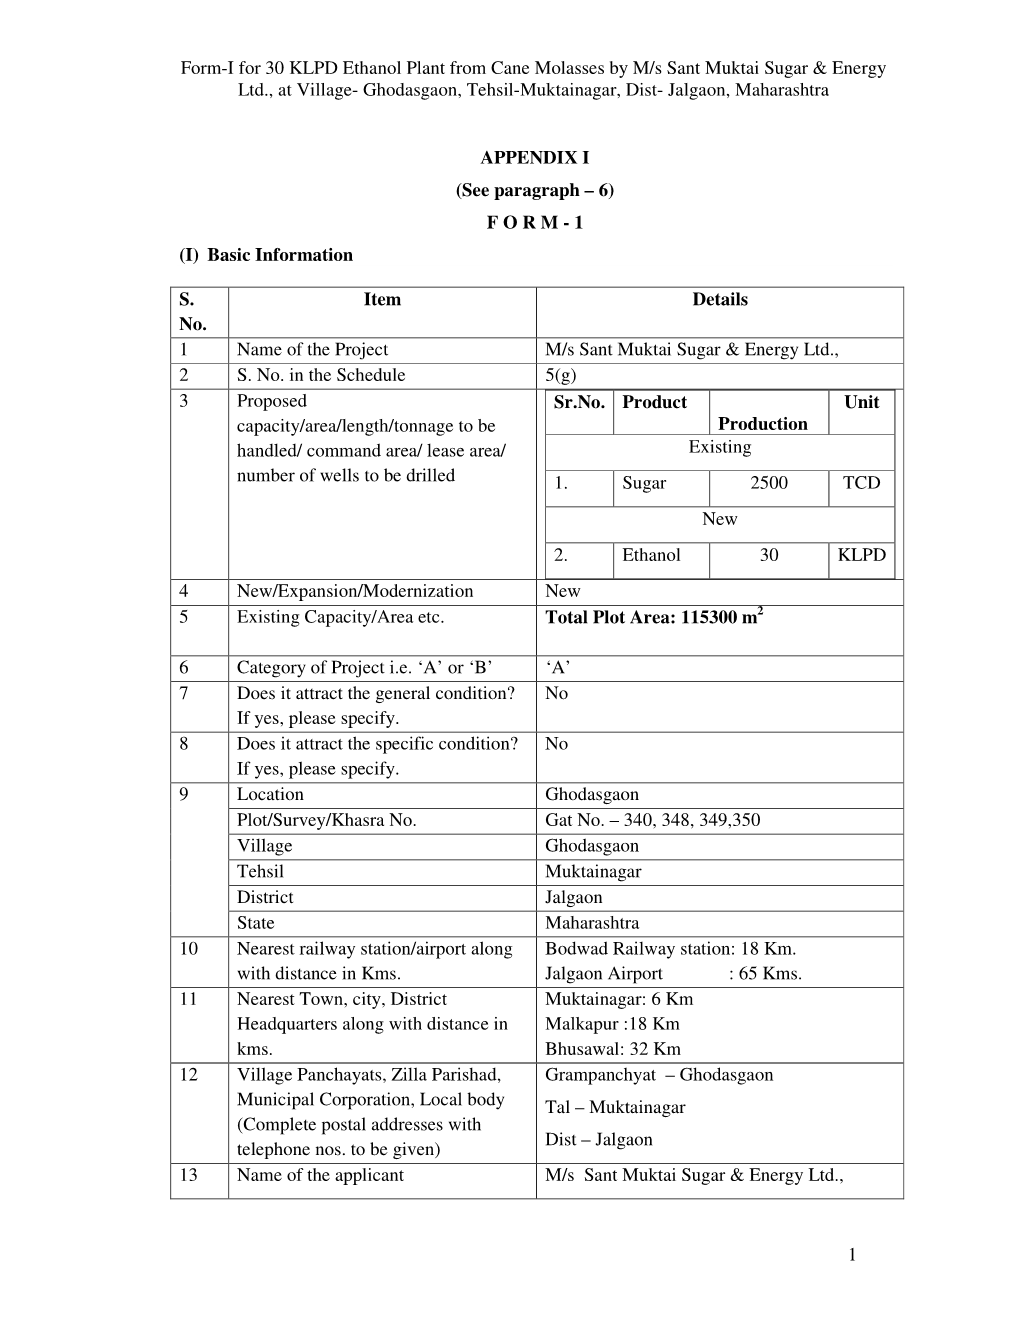 Form-I for 30 KLPD Ethanol Plant from Cane Molasses by M/S Sant Muktai Sugar & Energy Ltd., at Village- Ghodasgaon, Tehsil-Muktainagar, Dist- Jalgaon, Maharashtra